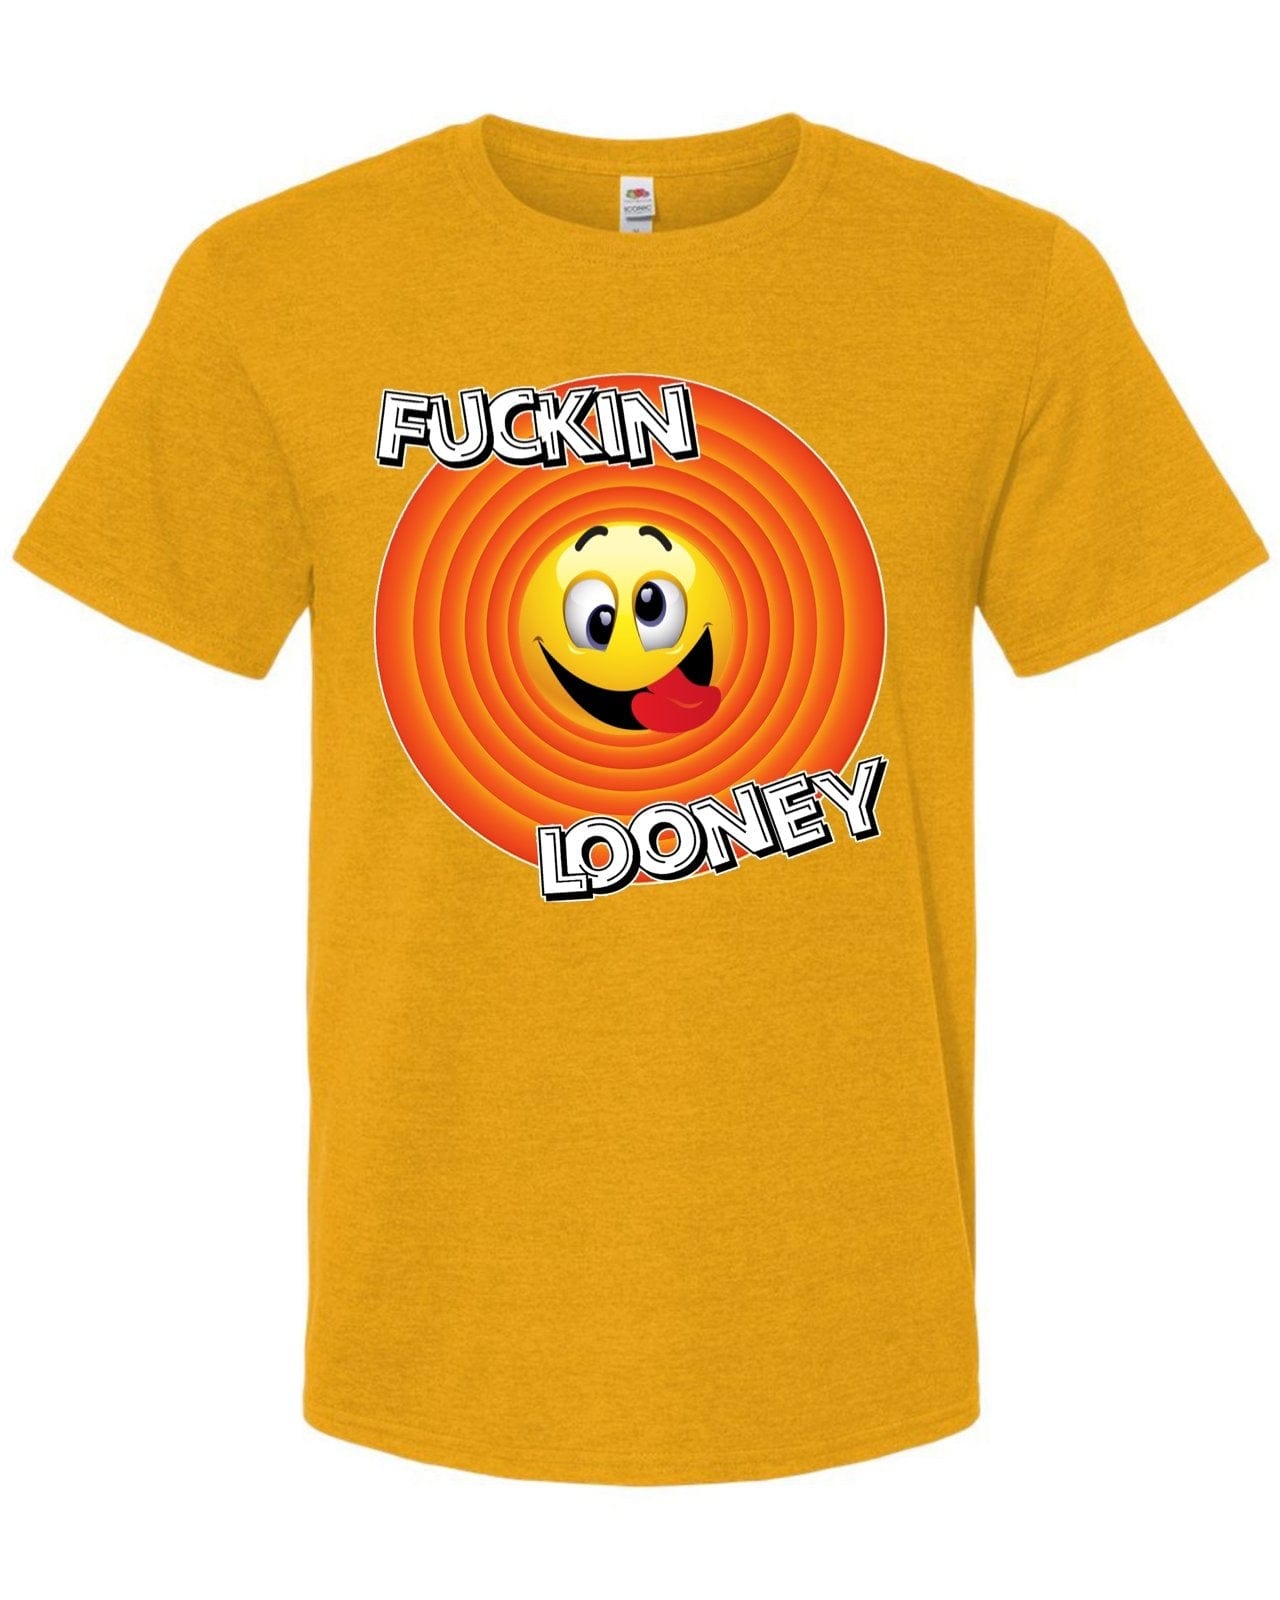 InsensitiviTees Shirts XL / Yellow Fuckin Looney